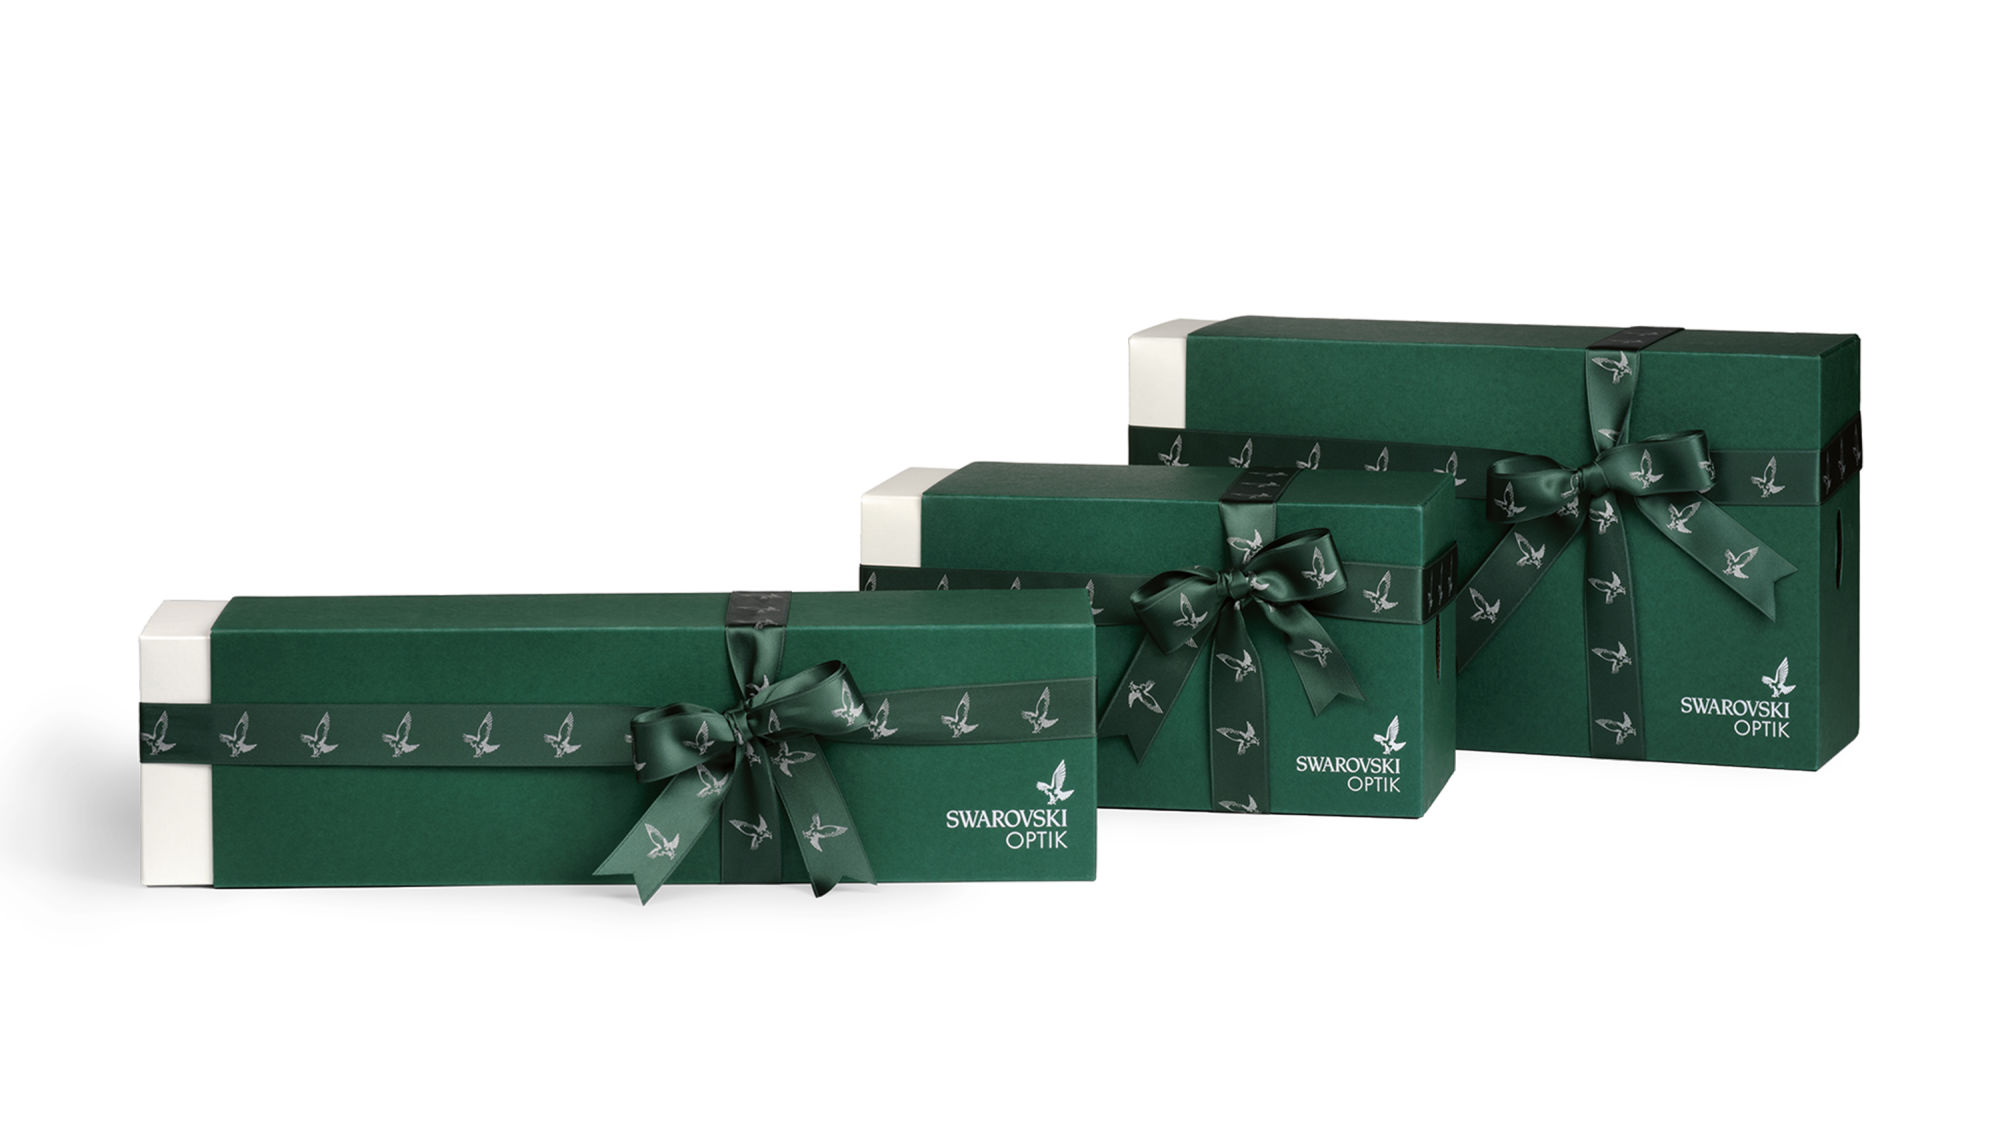 SWAROVSKI OPTIK the perfect gift sustainable packaging